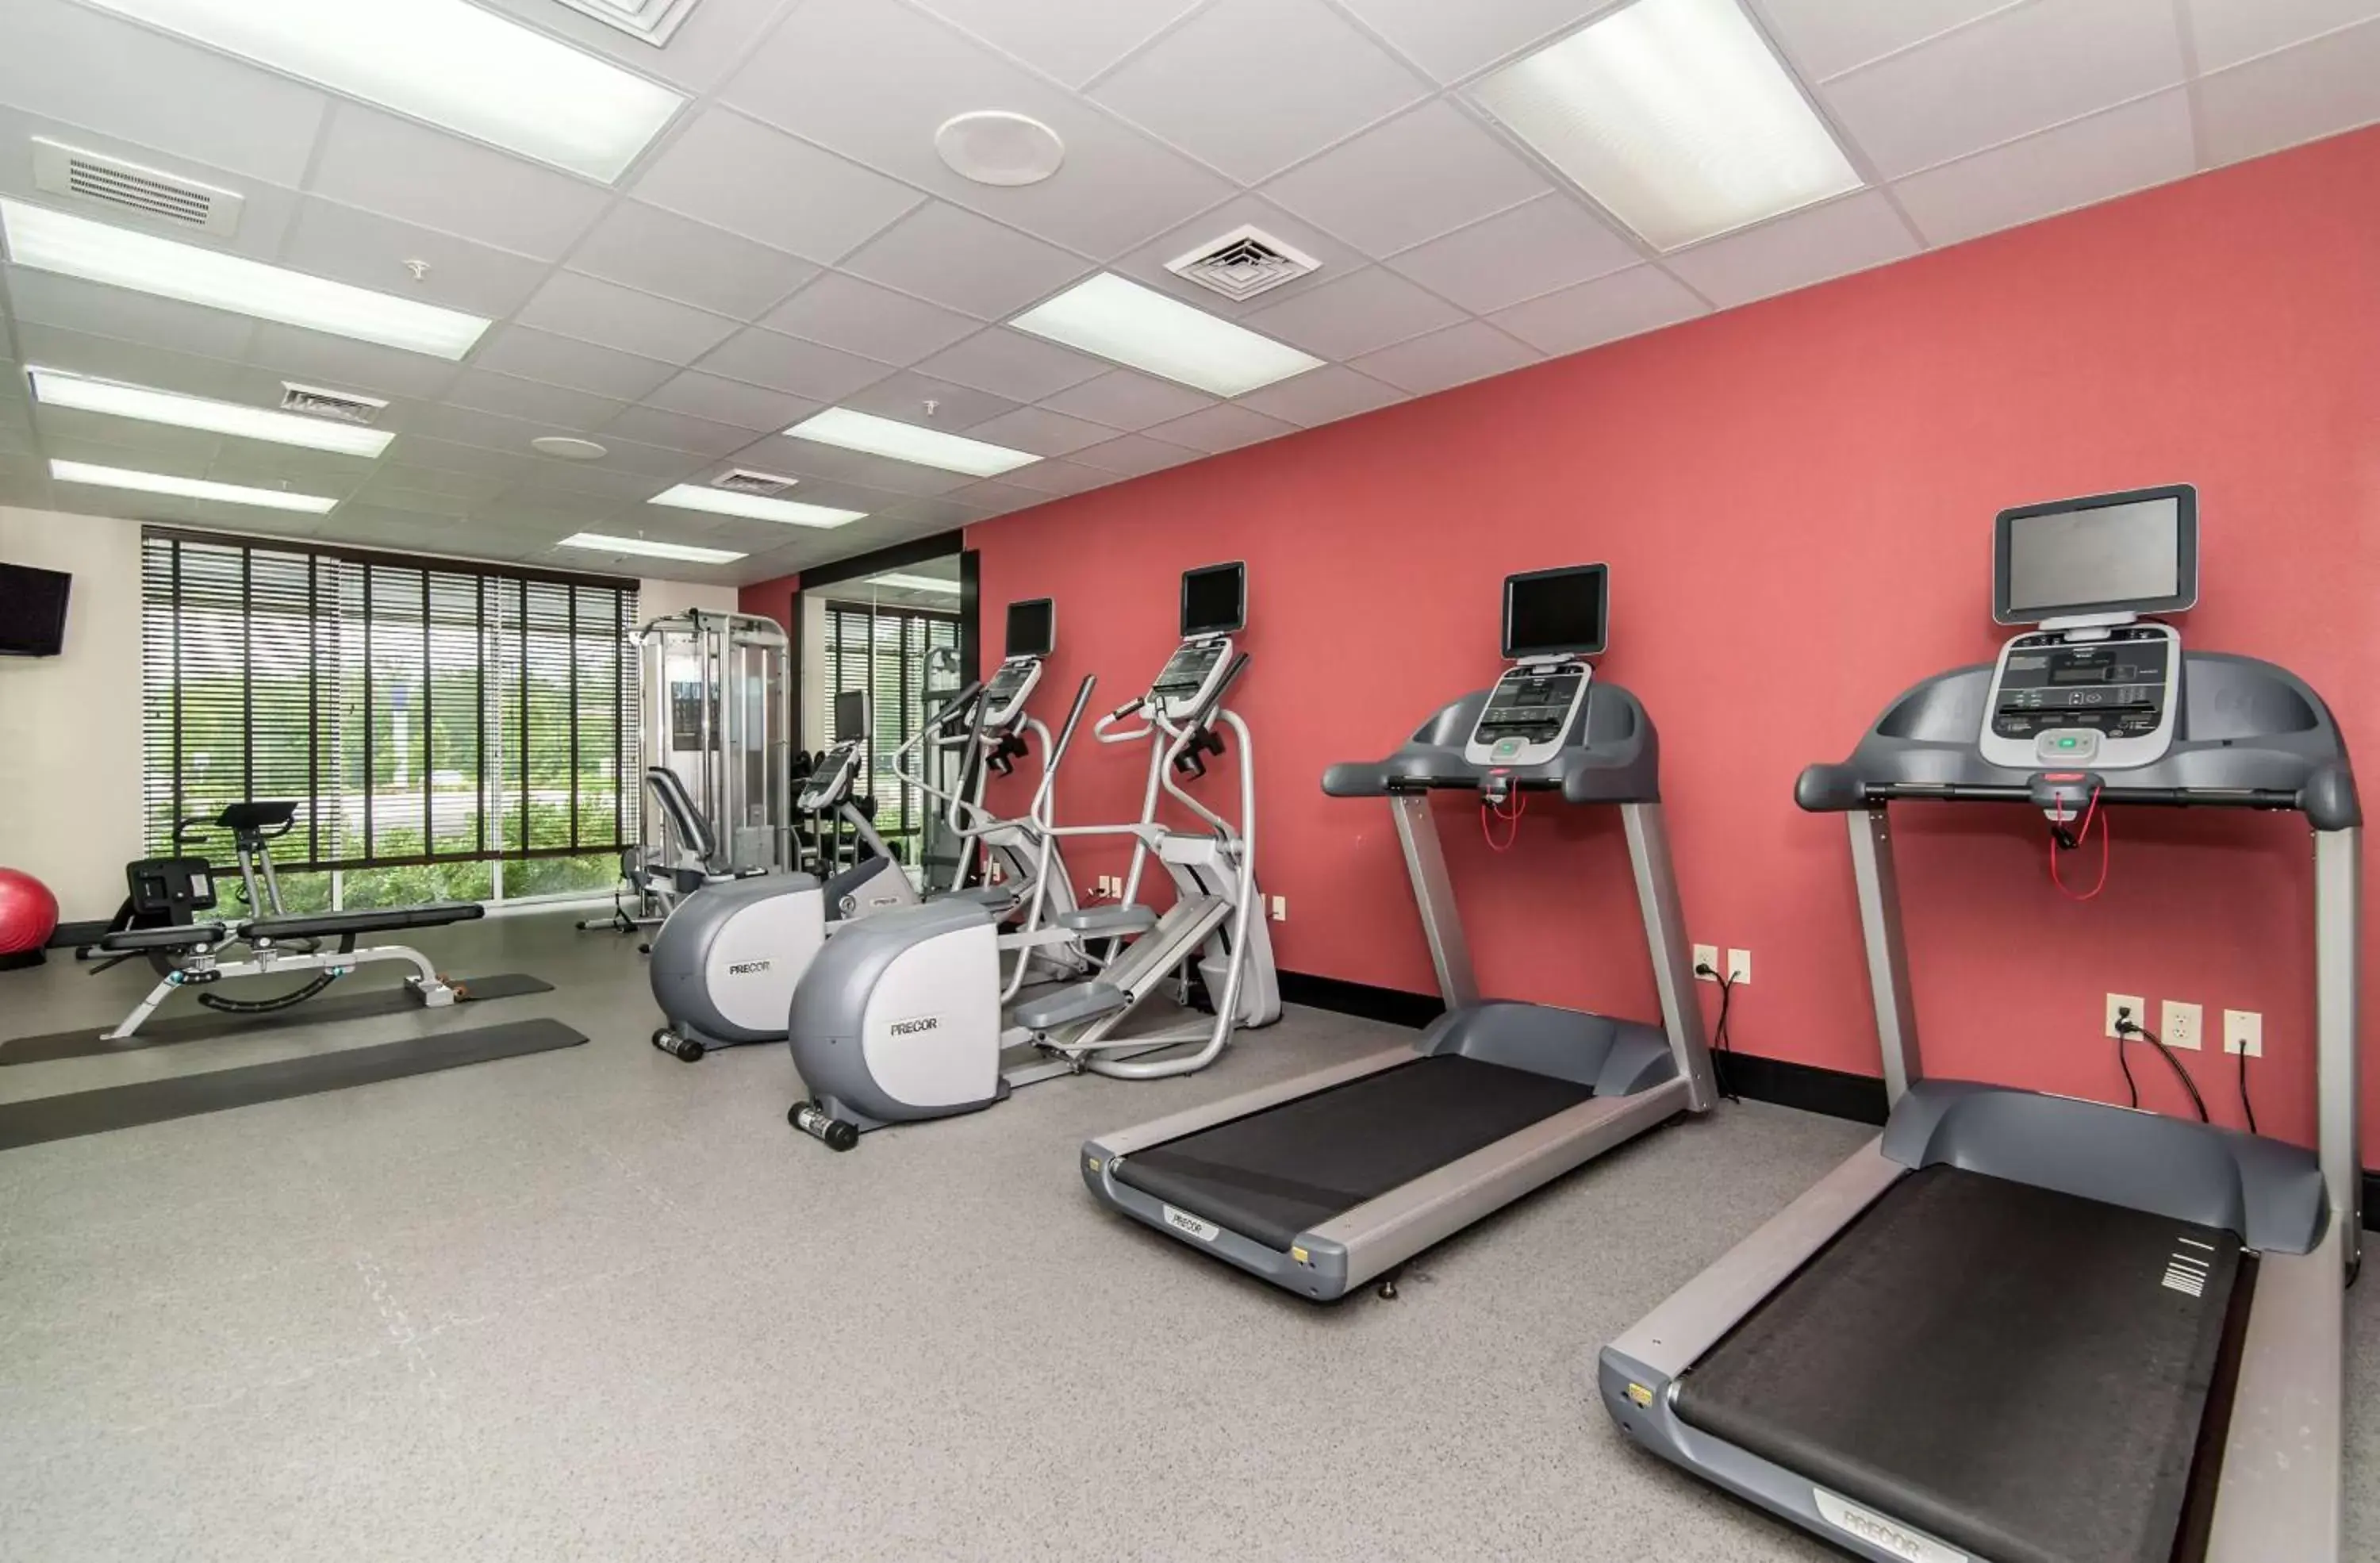 Fitness centre/facilities, Fitness Center/Facilities in Hilton Garden Inn Closest Foxwoods